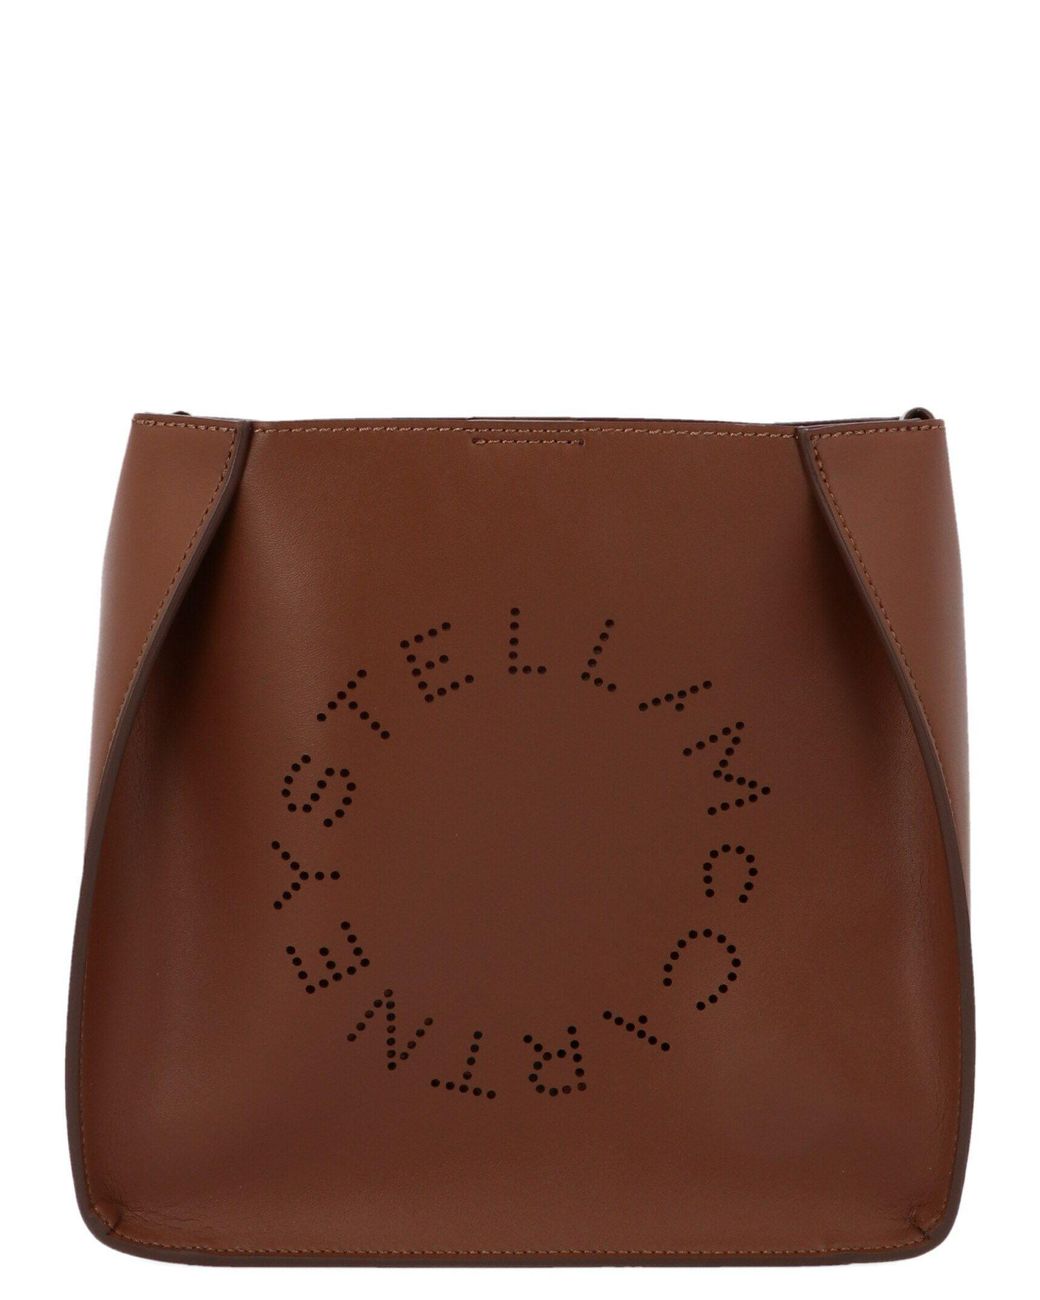 Stella McCartney Leather Logo Shoulder Bag in Brown - Save 26% - Lyst